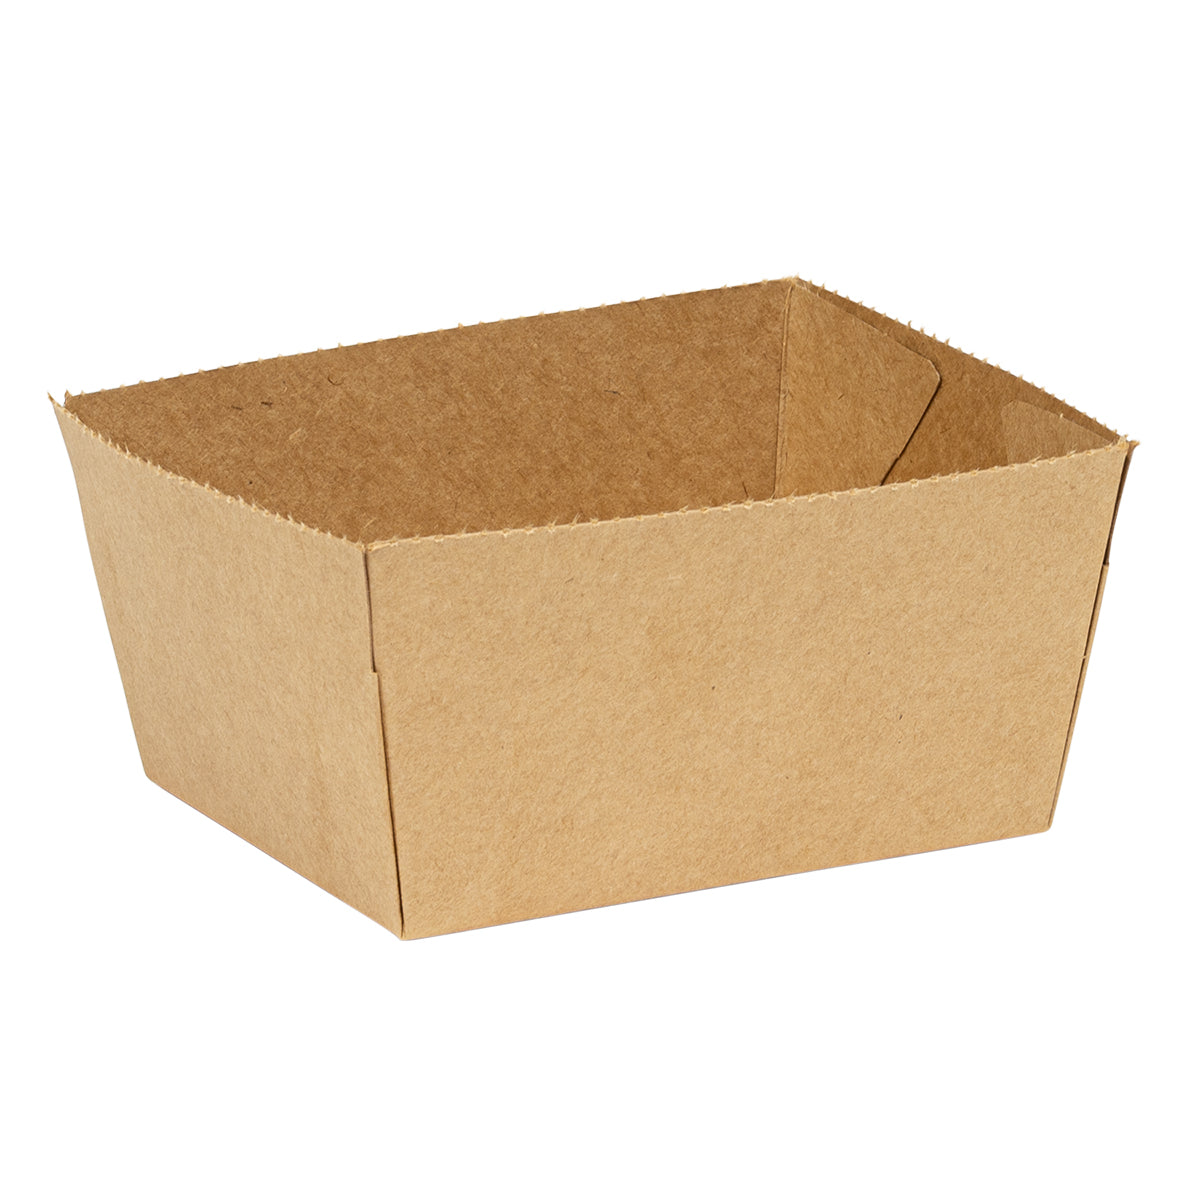 26 oz Recycled Kraft Paper Food Box | #1 Size